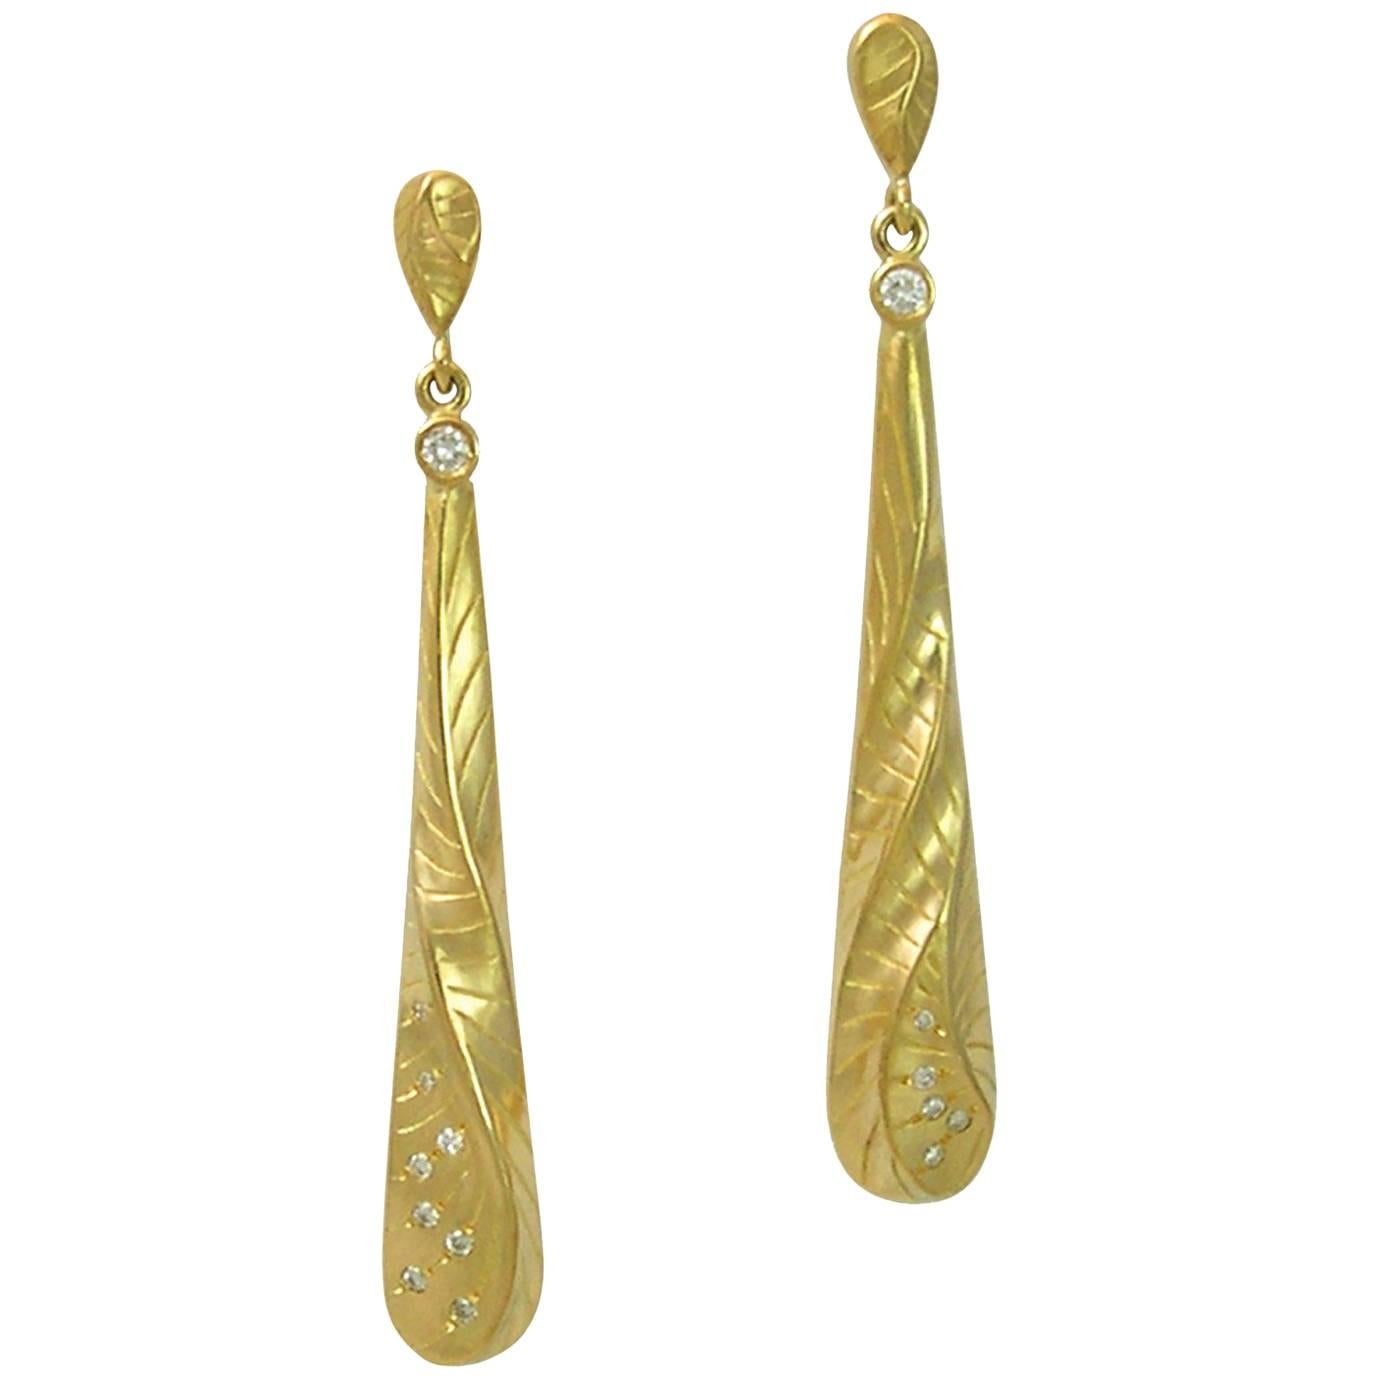 Tear Drop Dangle Earrings in 14 Karat Yellow Gold with 0.25 Carat Diamonds For Sale